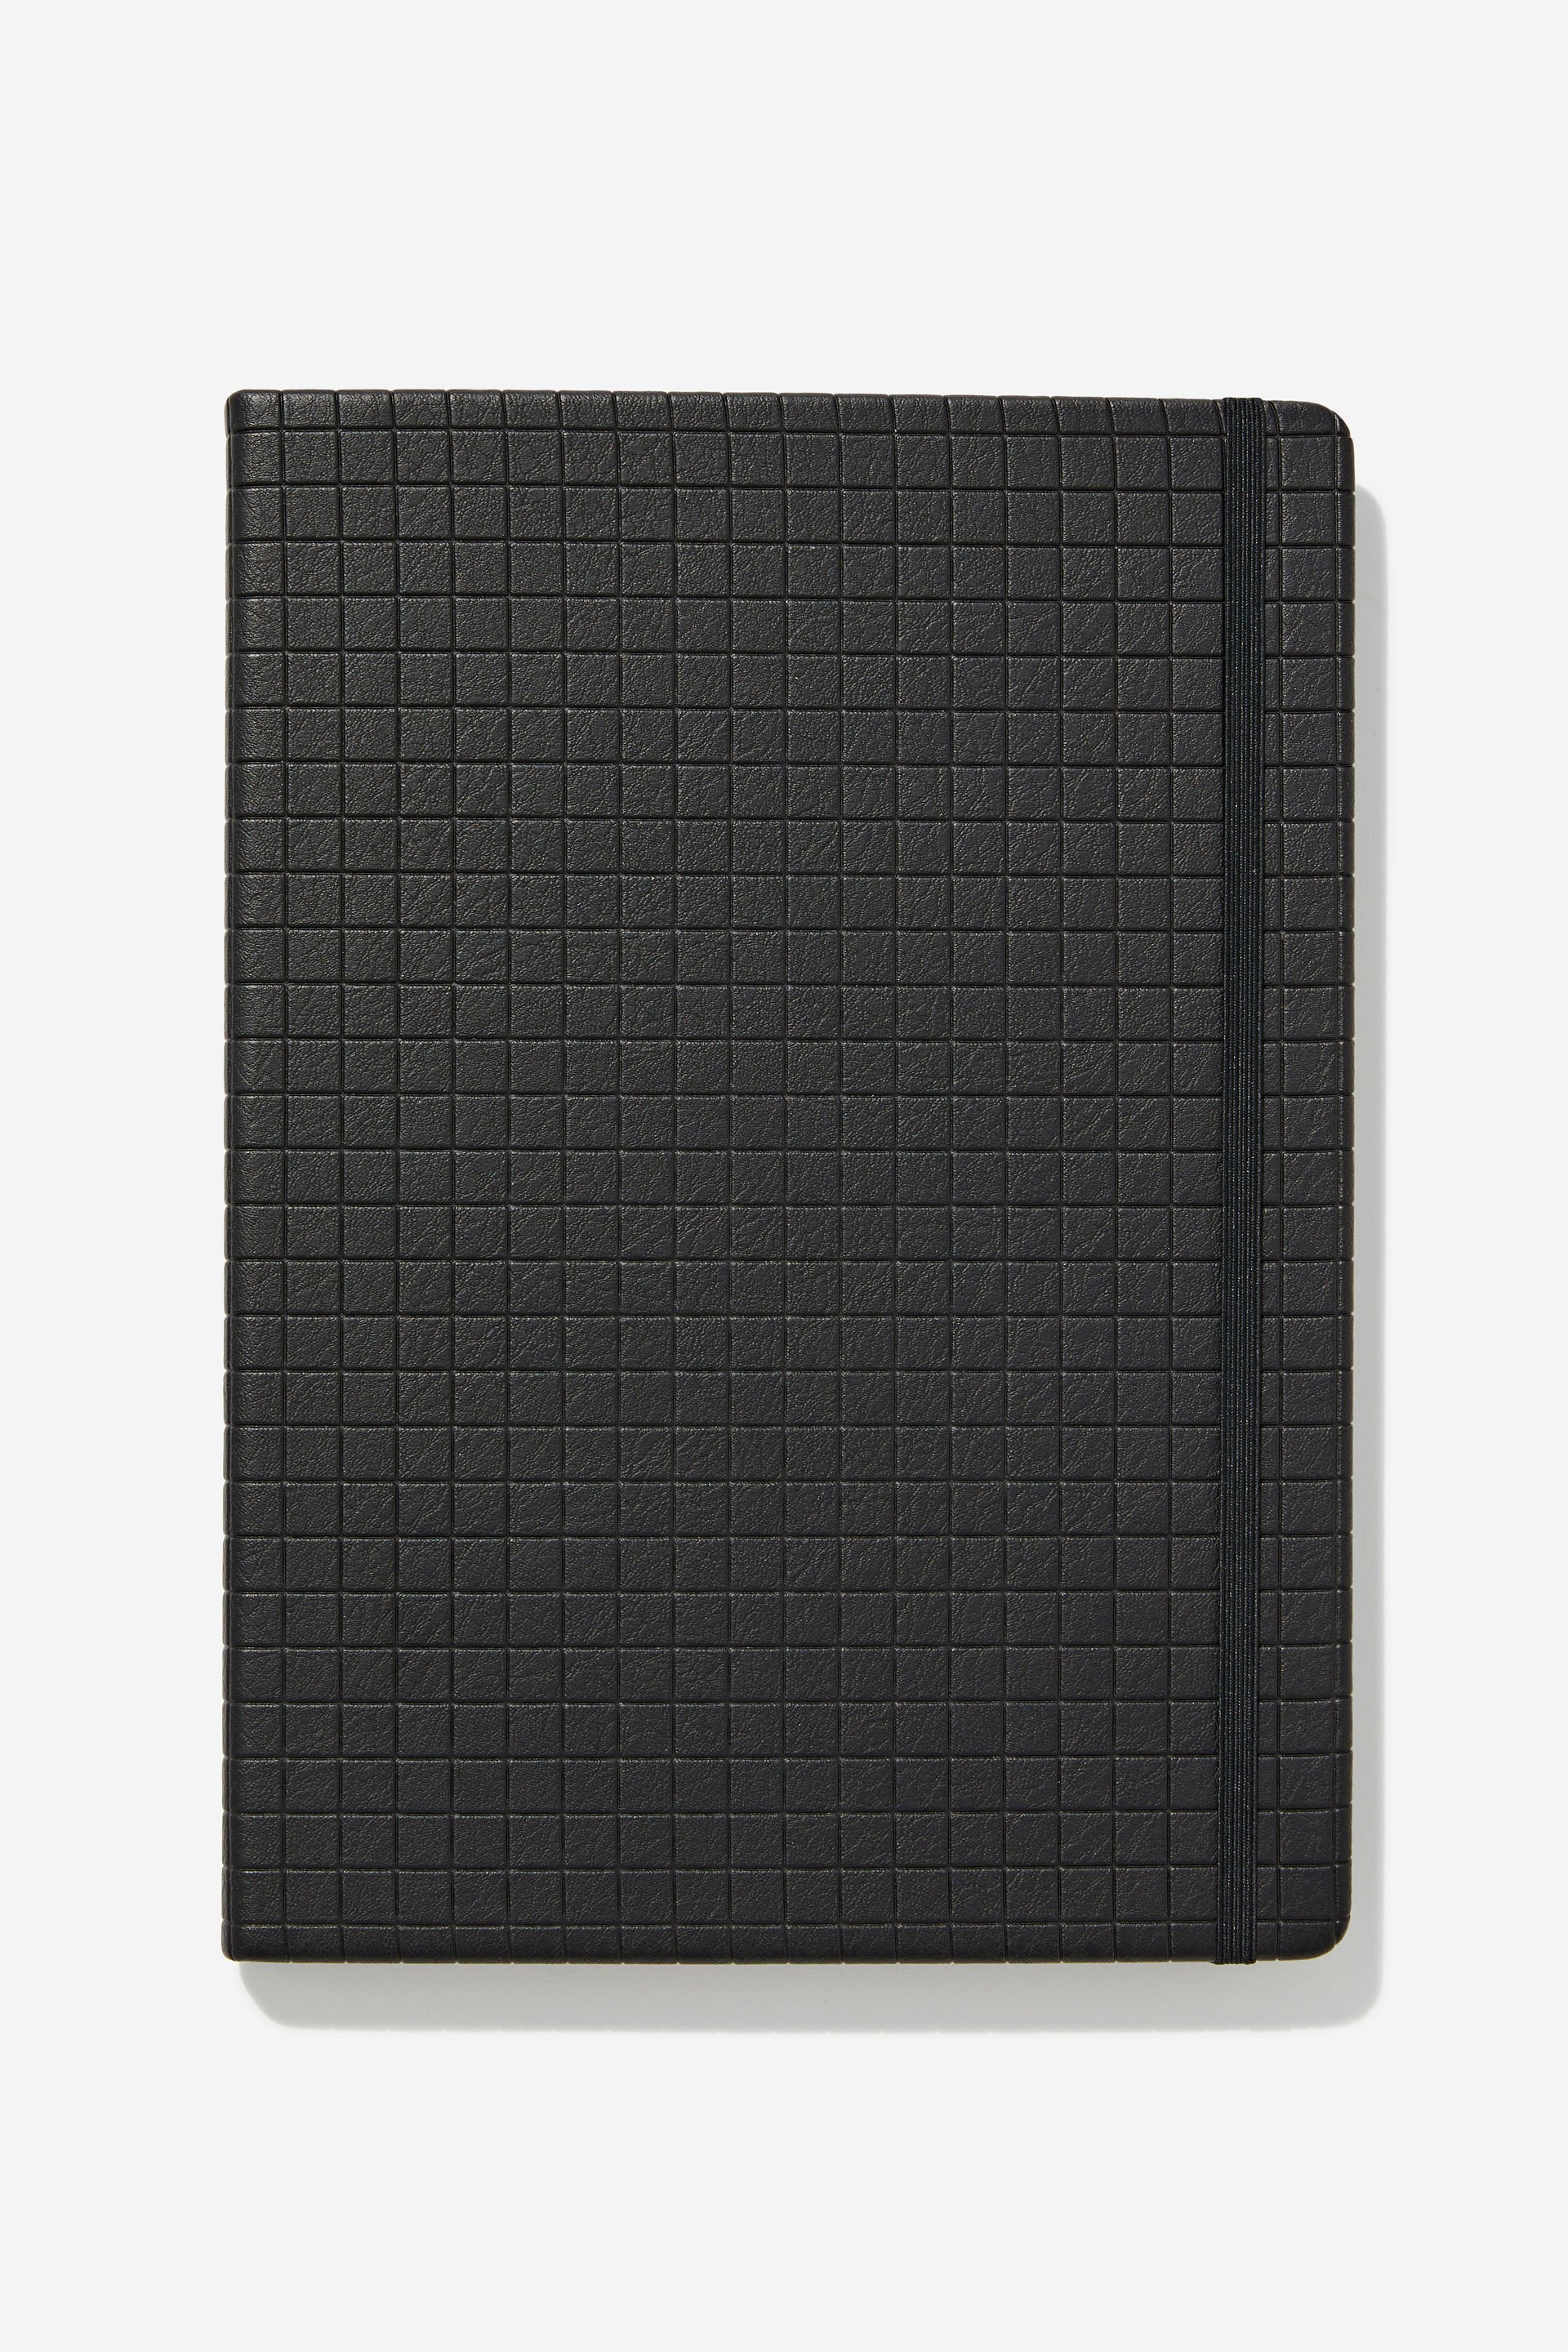 Typo - A4 Premium Buffalo Journal - Grid black debossed